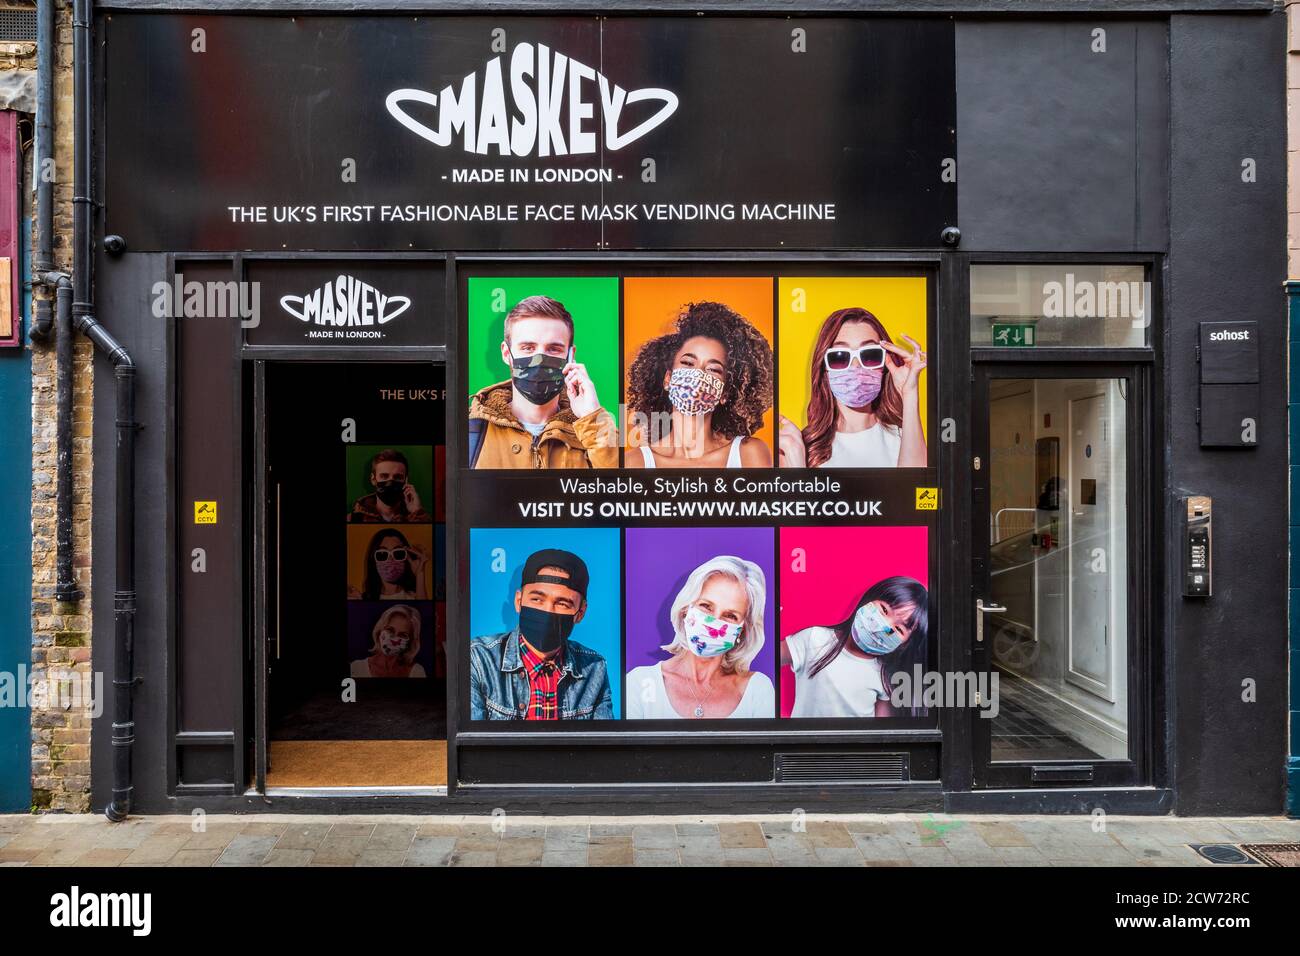 MakeY Face Mask Store en Berwick Street en Soho London - ejemplo de una oportunidad de negocios pandémica Covid-19. Foto de stock